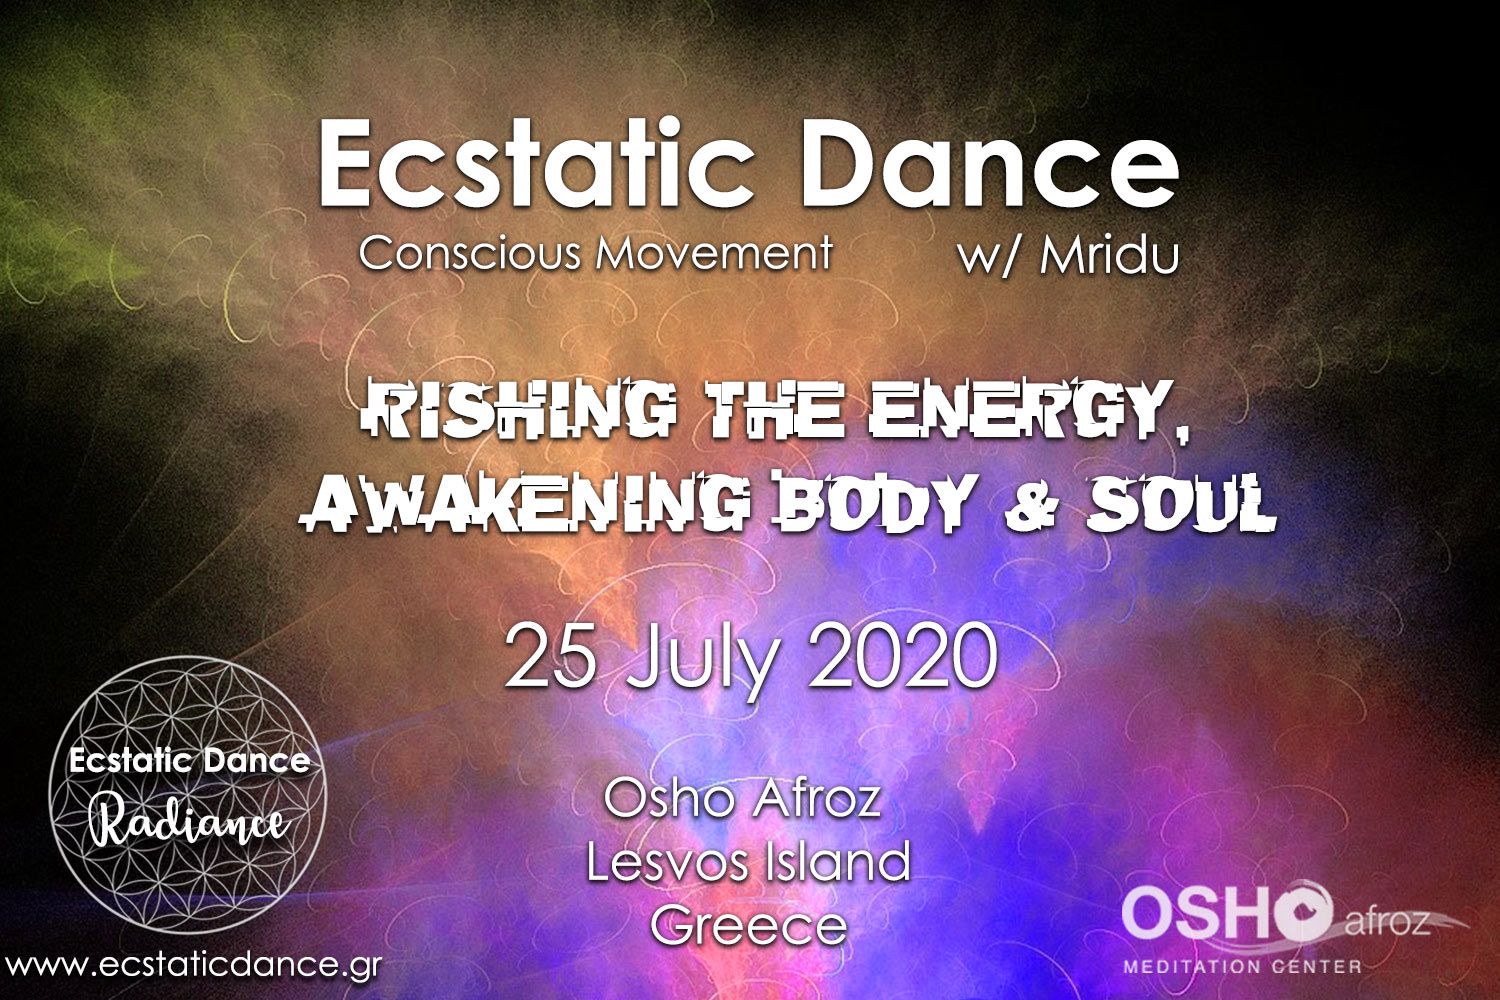 Ecstatic Dance Afroz Awakening